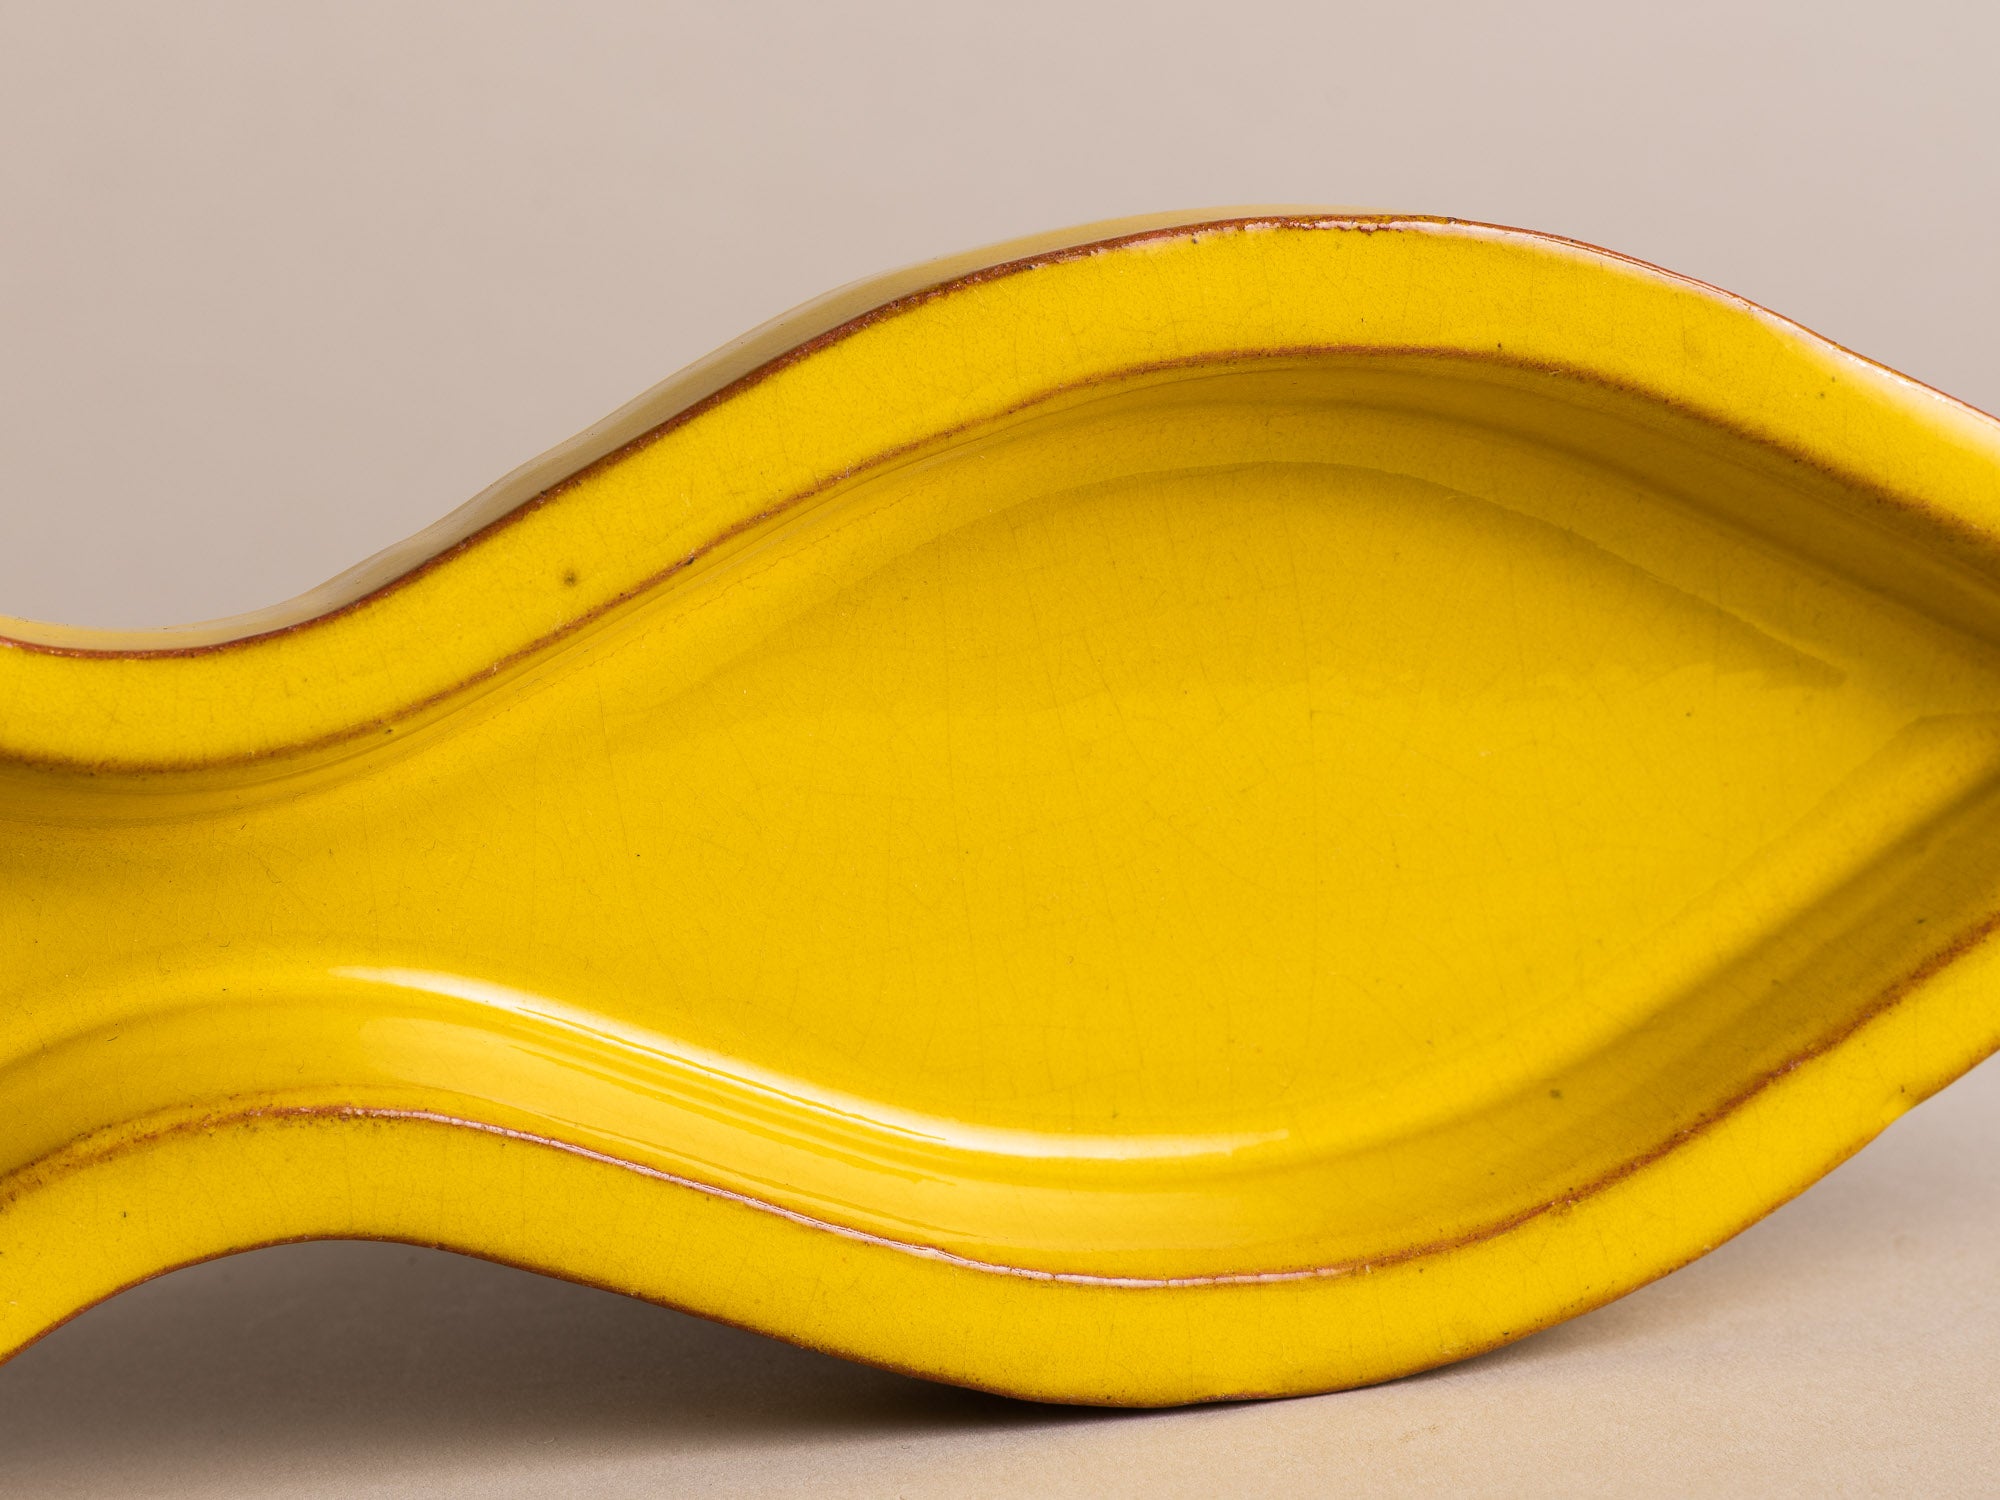 Coupe zoomorphe de Robert Picault pour Cerasarda, Italie (années 1960)..Zoomorphic bowl by Robert Picault for Cerasarda, Italy (1960)